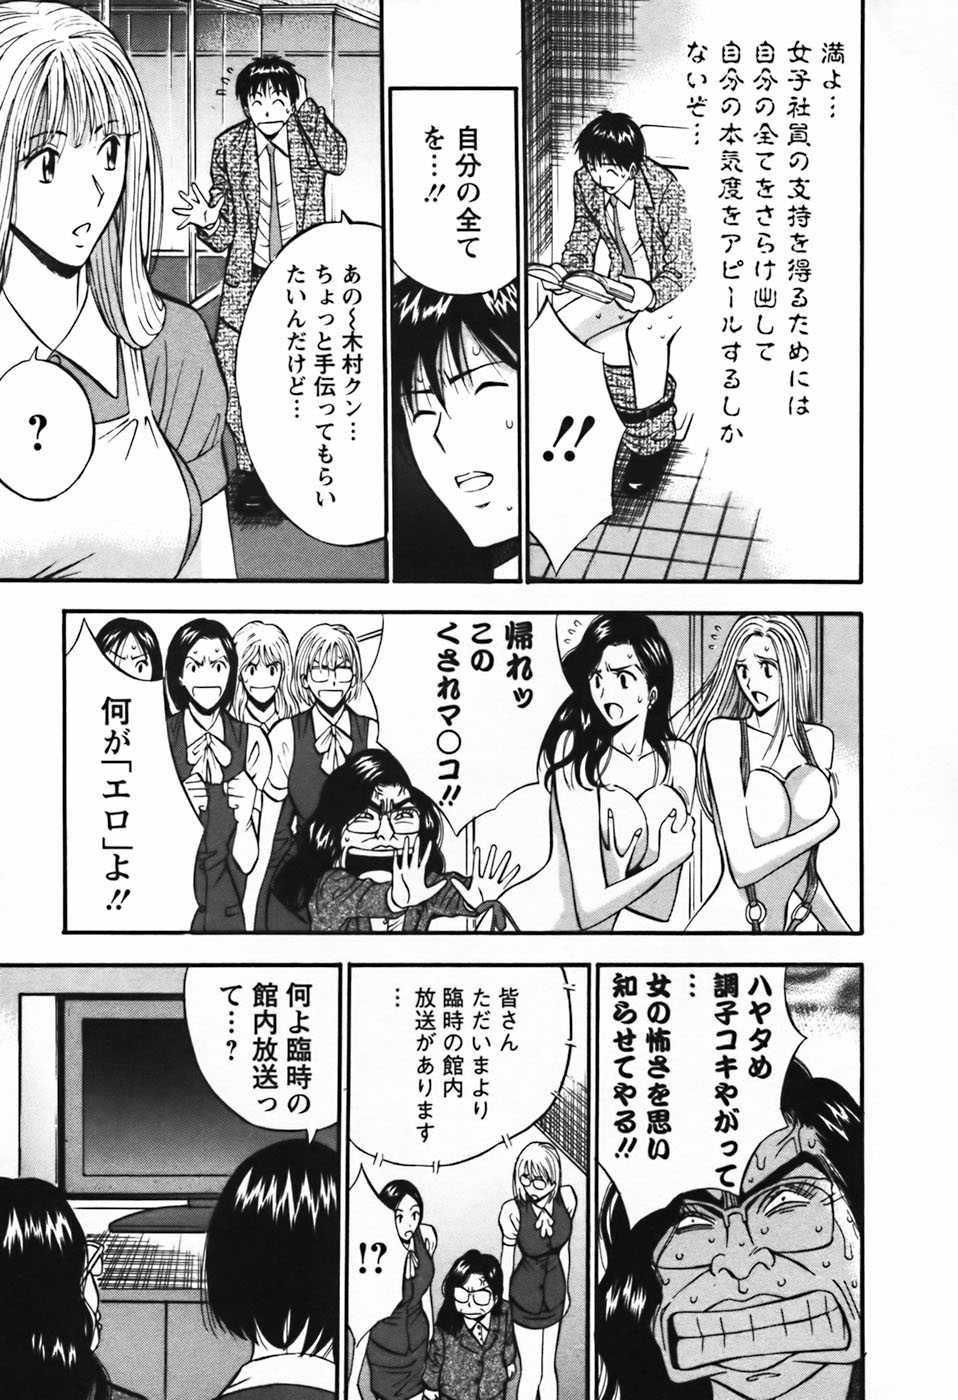 Chosuke nagashima Sexual Harassment Man Vol. 03 